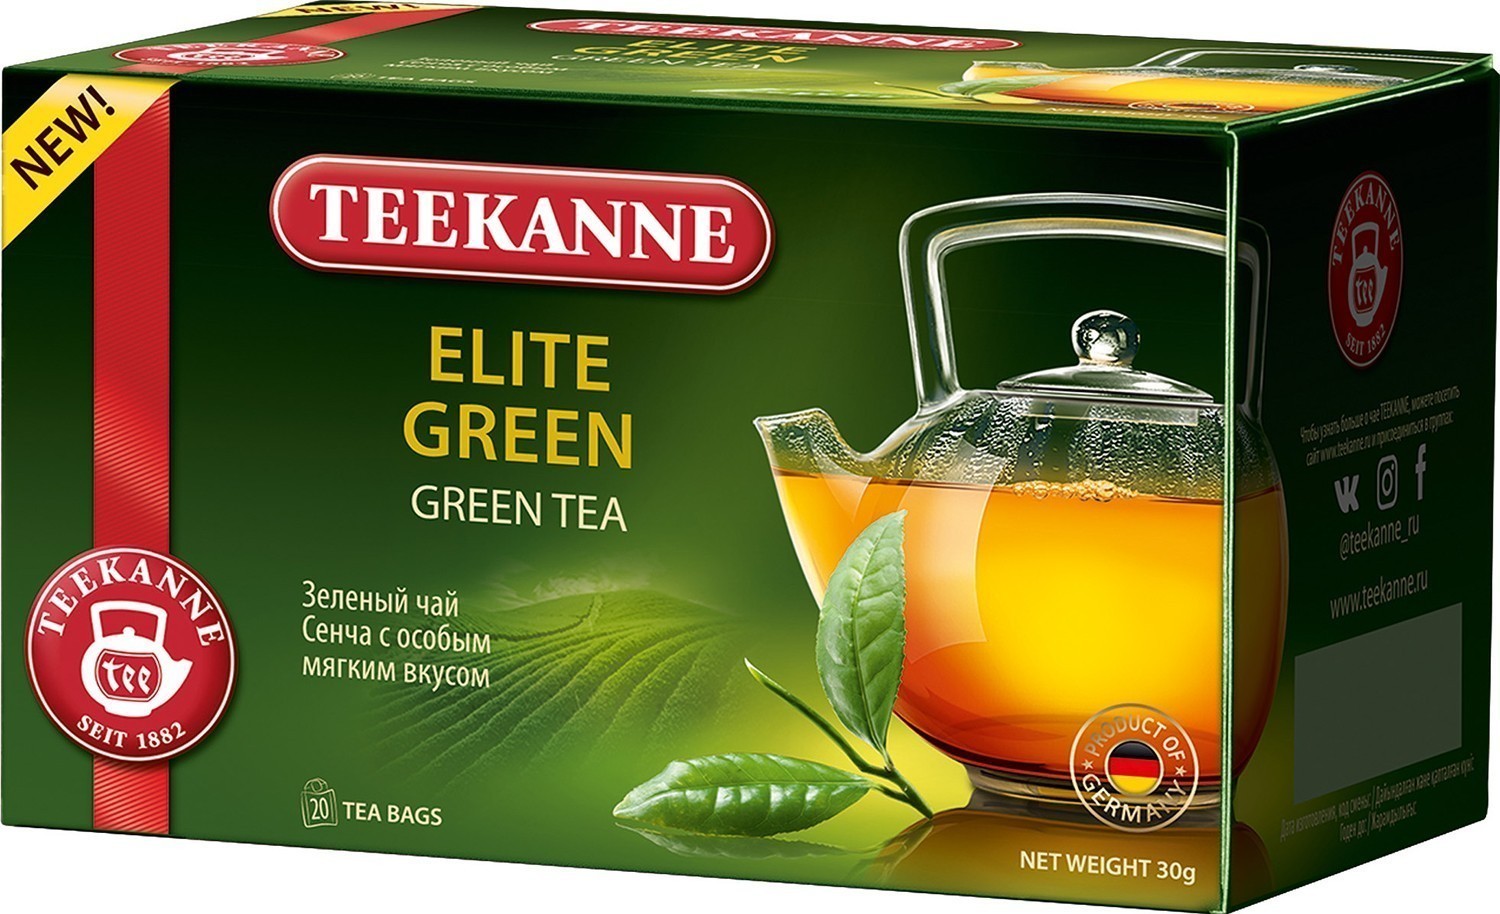 Чай TEEKANNE зел. ЭЛИТ ГРИН/ELITE Green 20 пак.